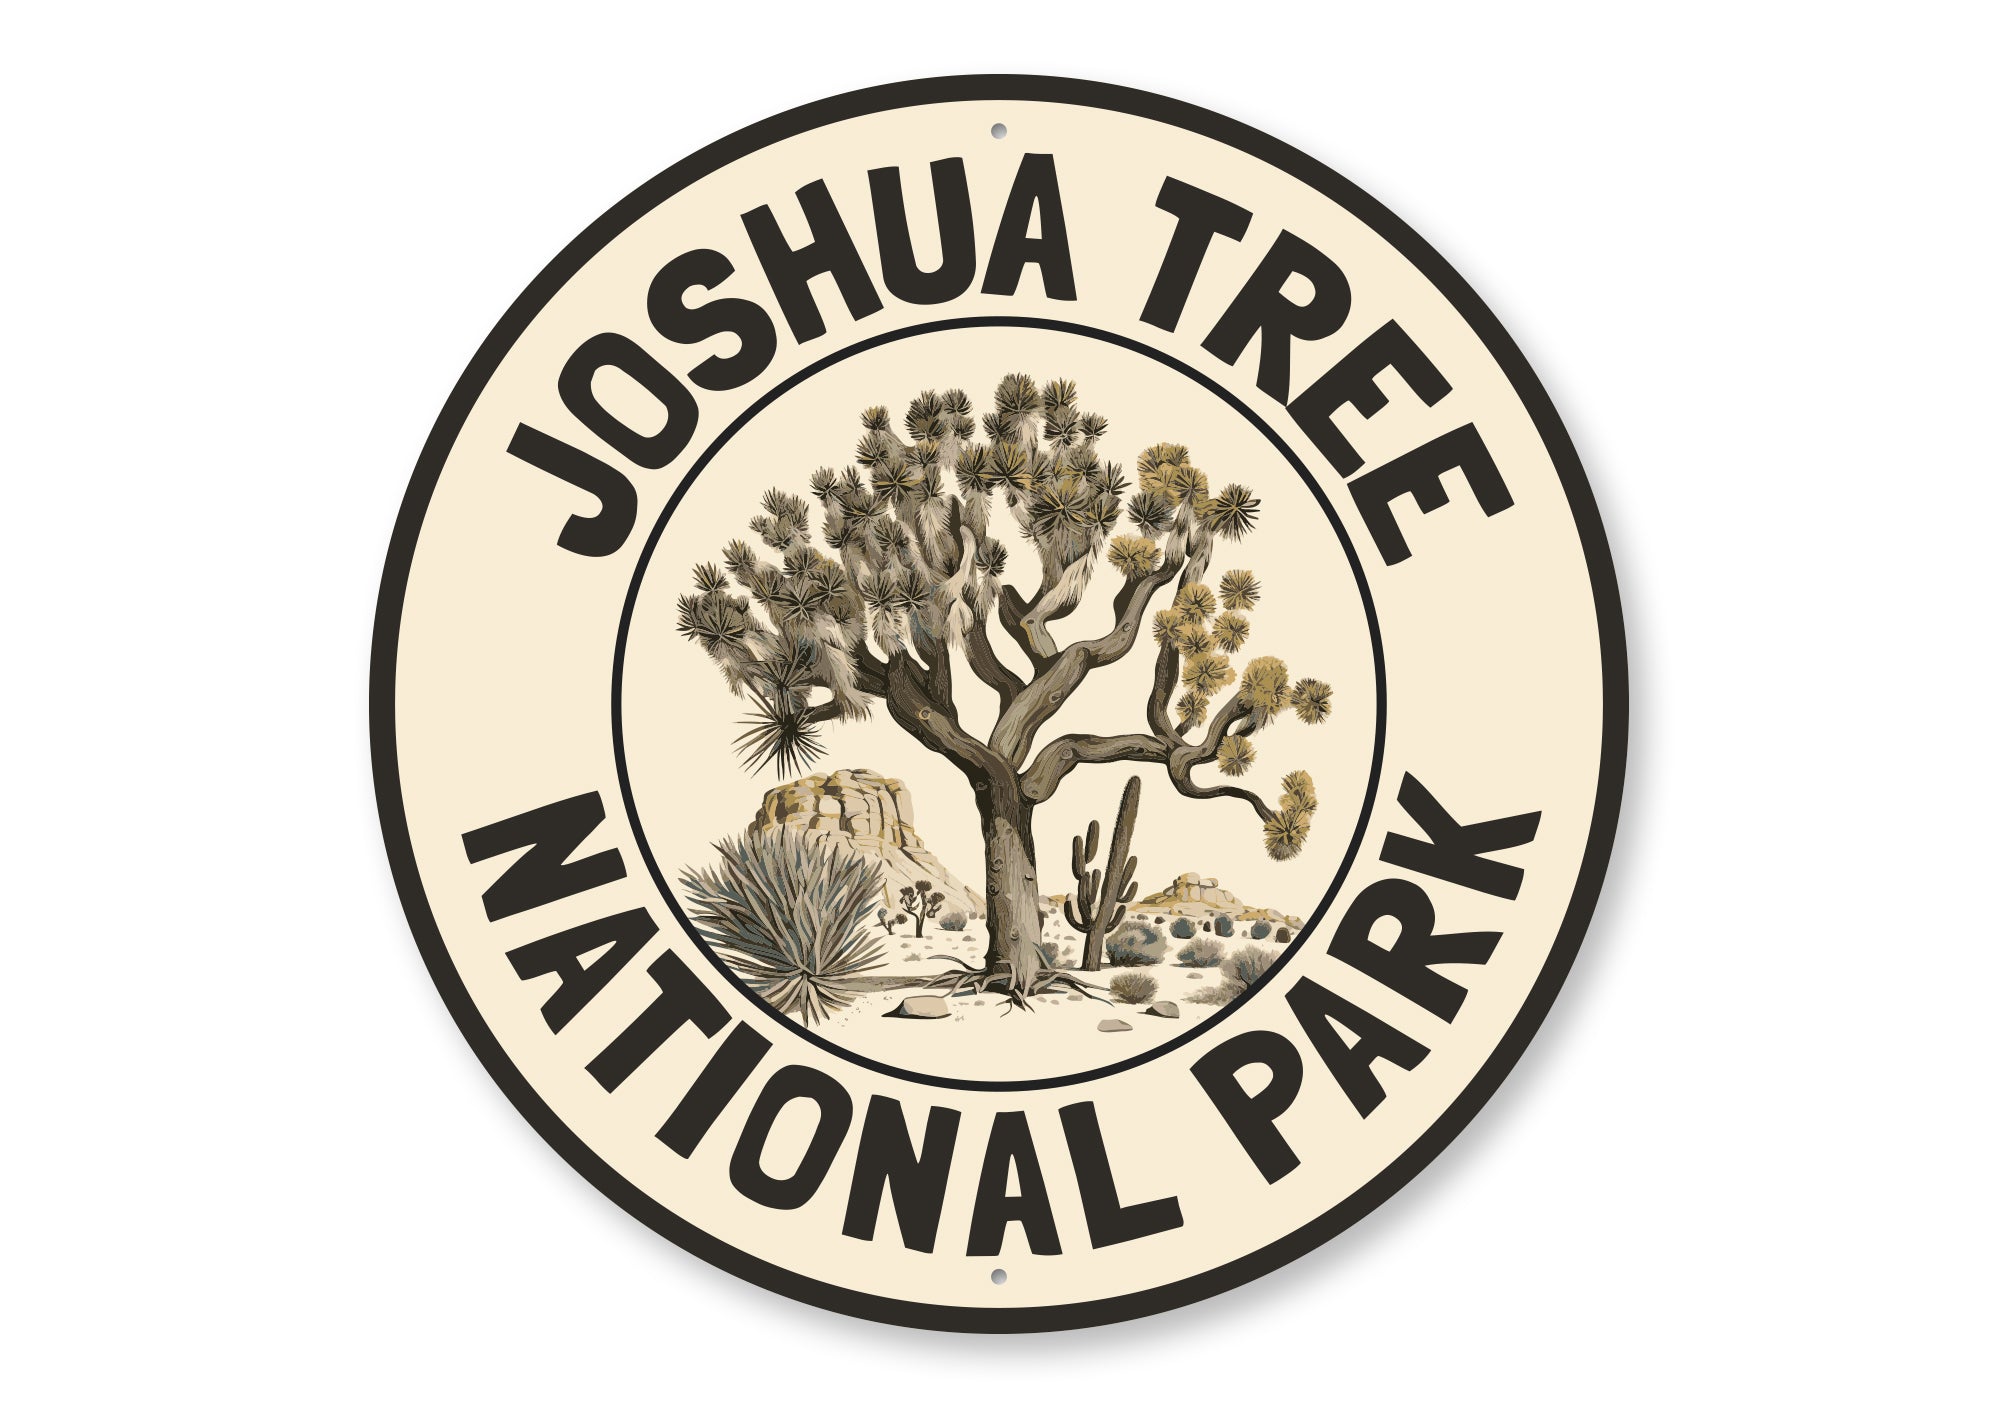 Joshua Tree National Park Round Metal Sign